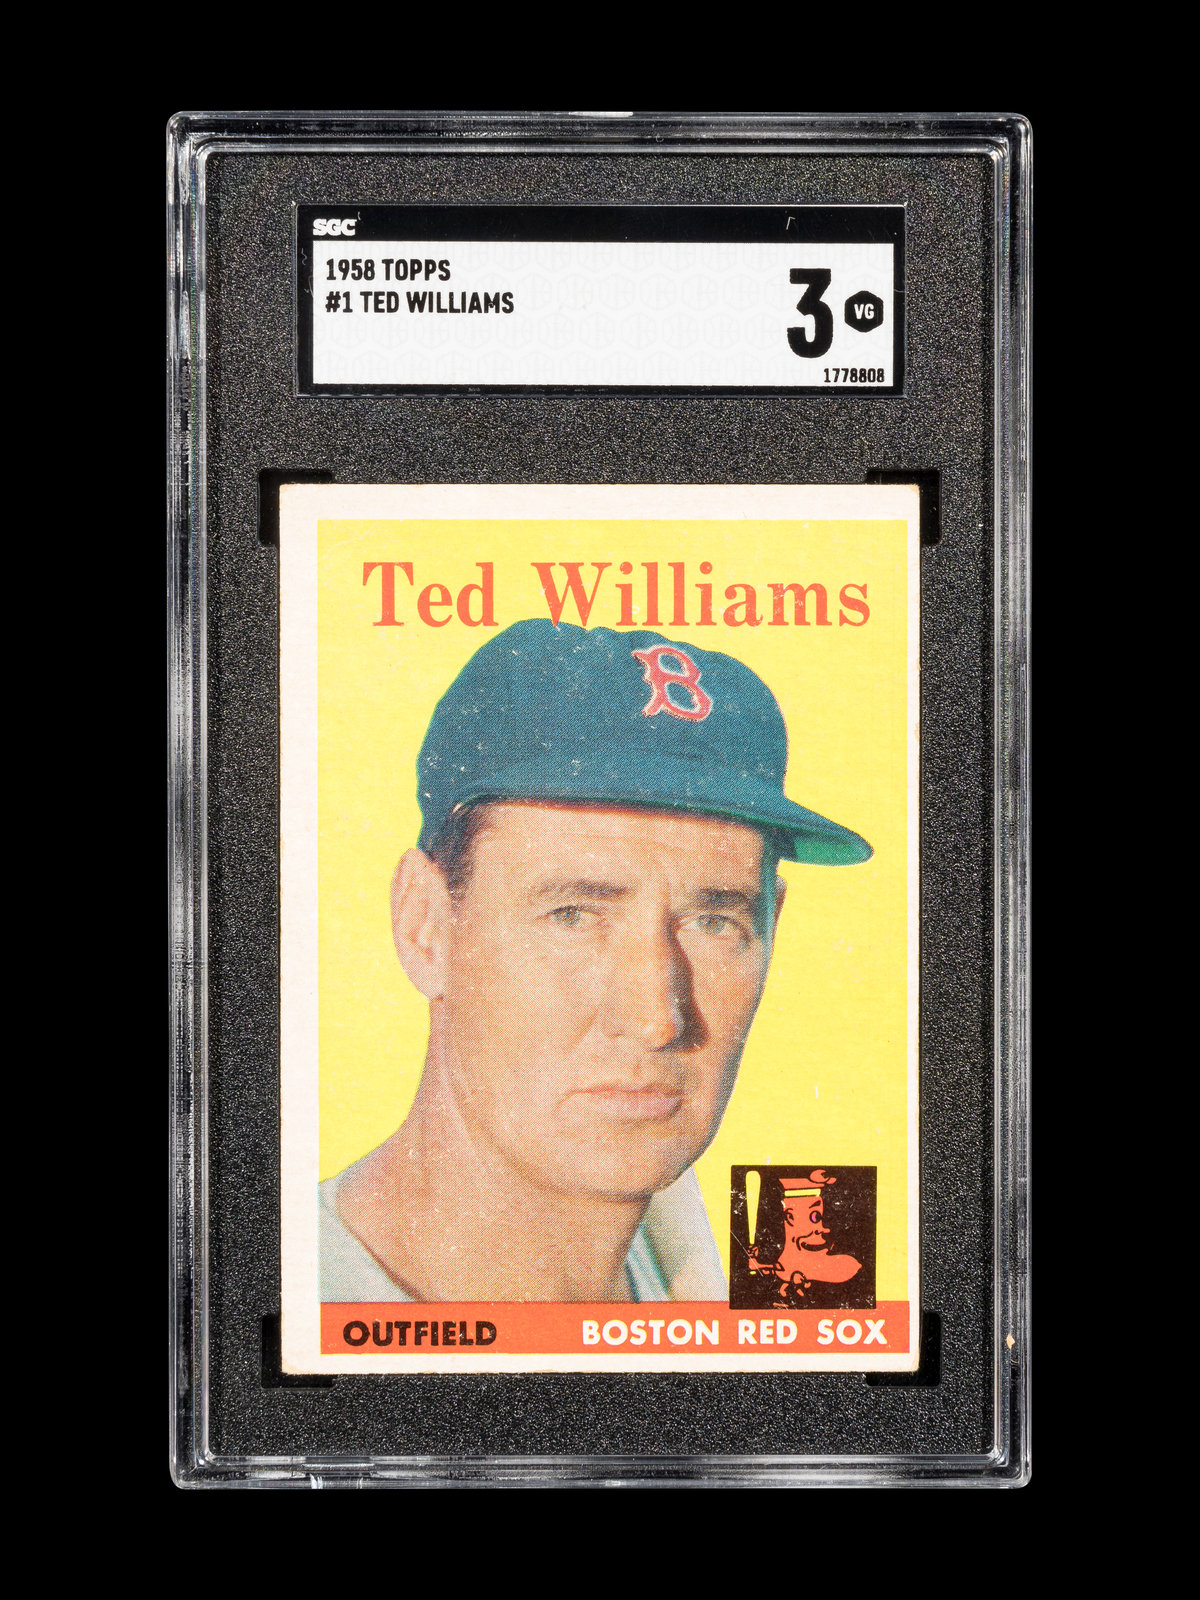 A 1958 Topps Ted Williams Baseball Card No. 1 (SGC 3 VG)